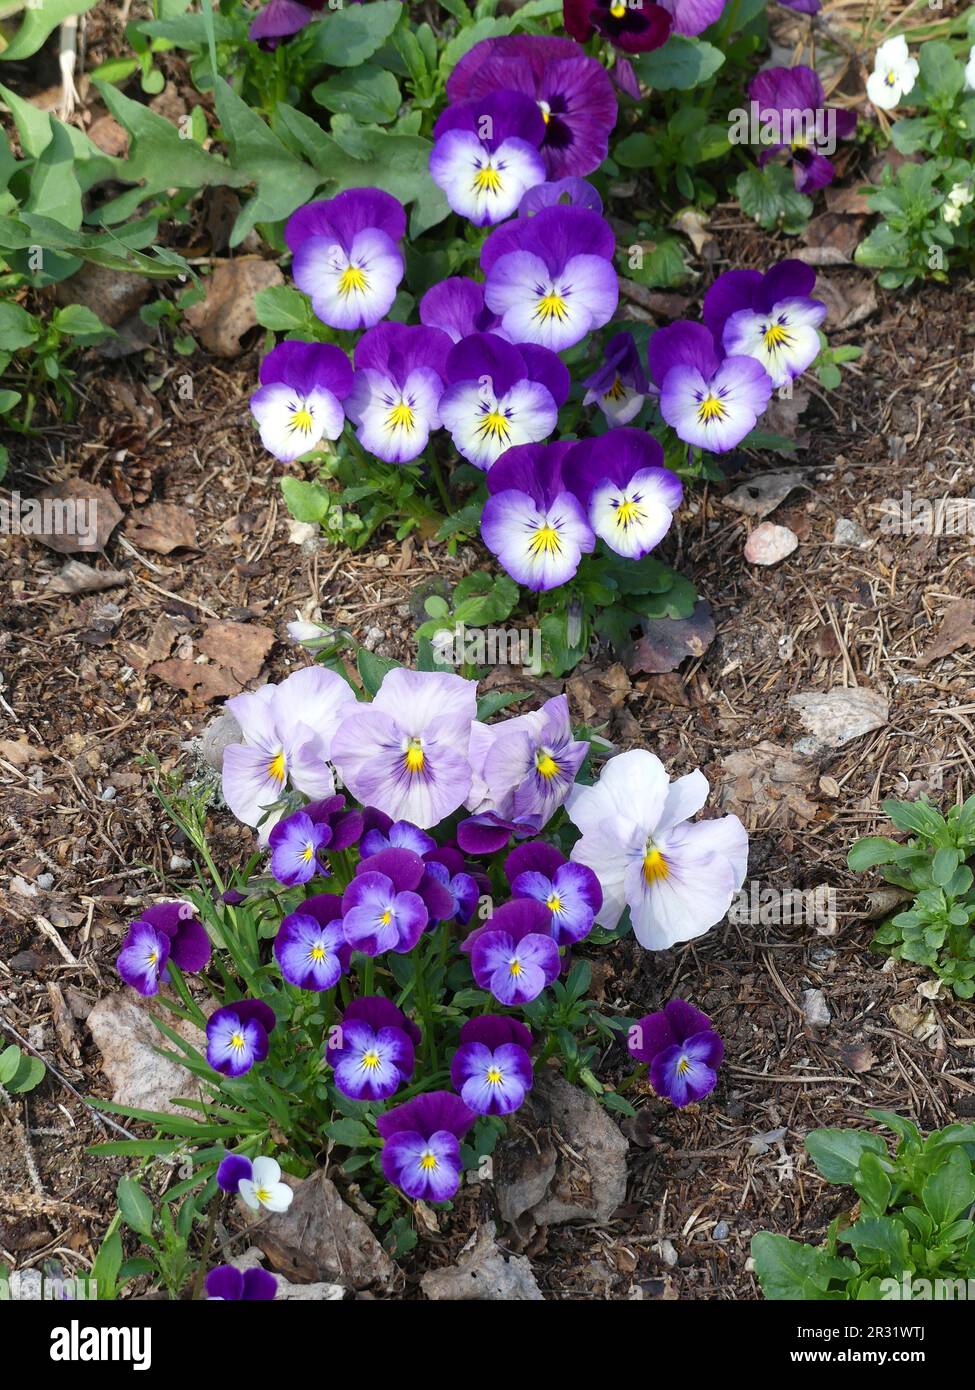 Purple and white pansies Stock Photo